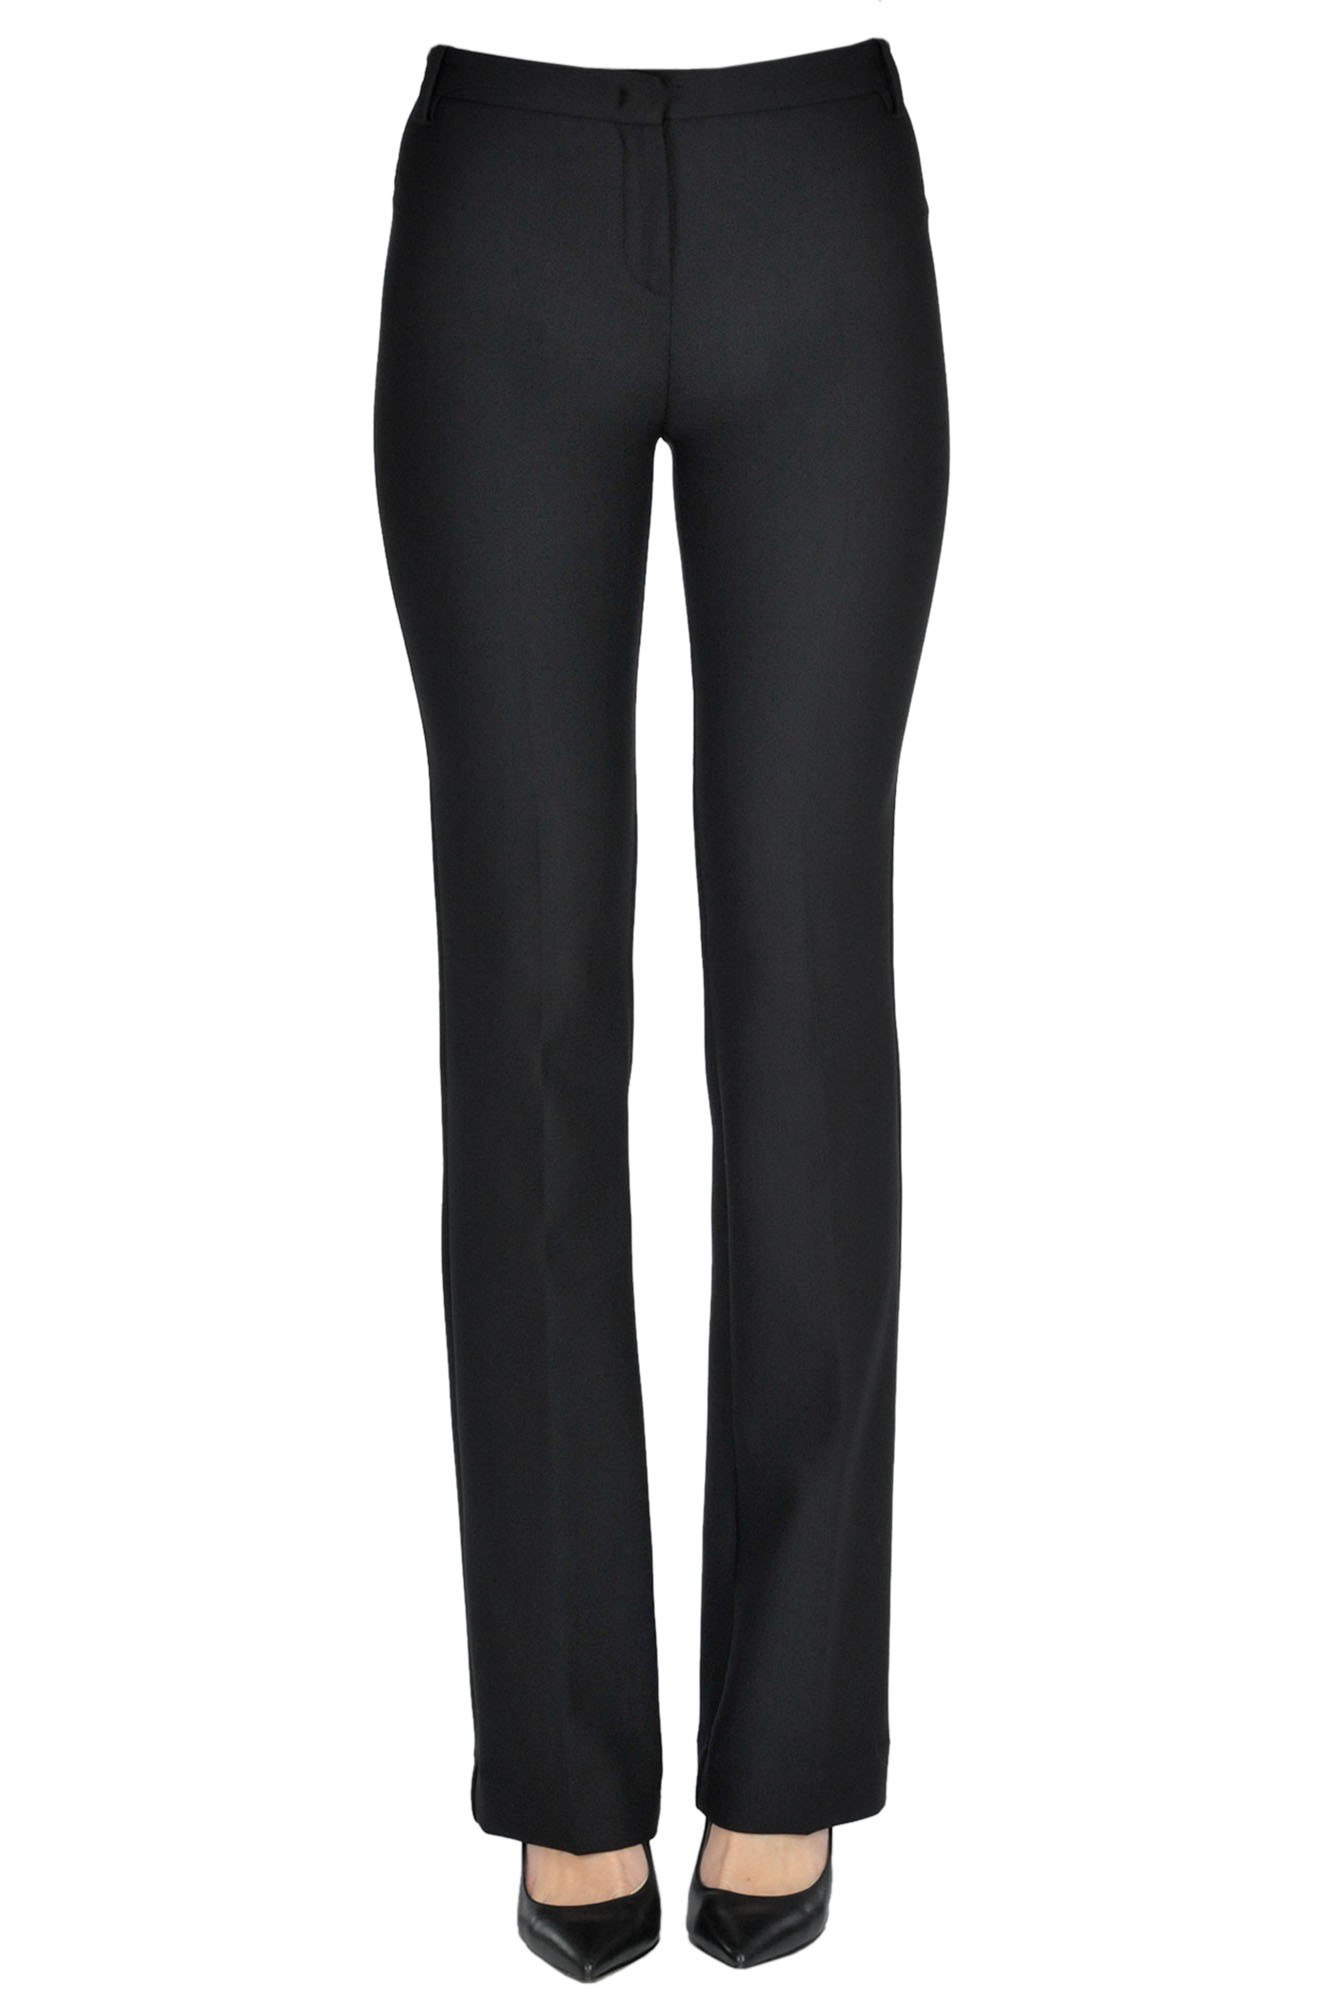 Pinko Allievo trousers - Buy online on Glamest Fashion Outlet - Glamest ...